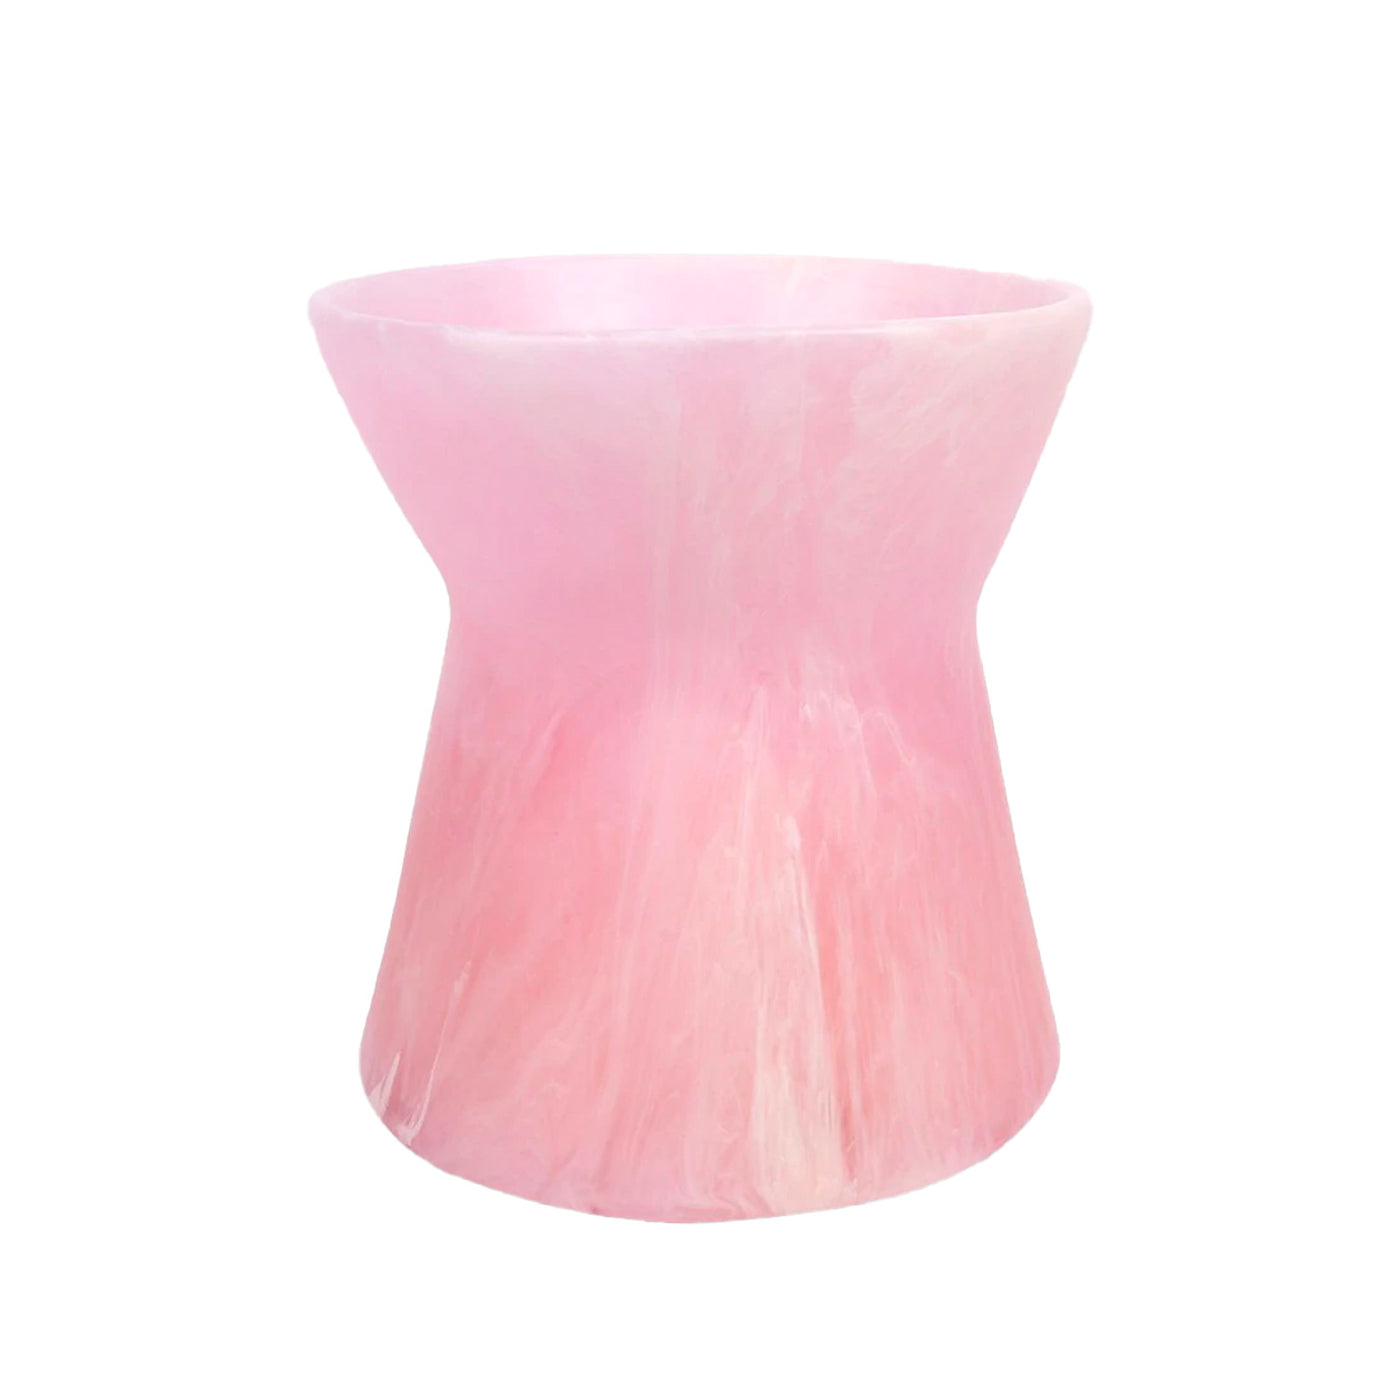 Bow Vase by Dinosaur Designs | Julia Moss Designs